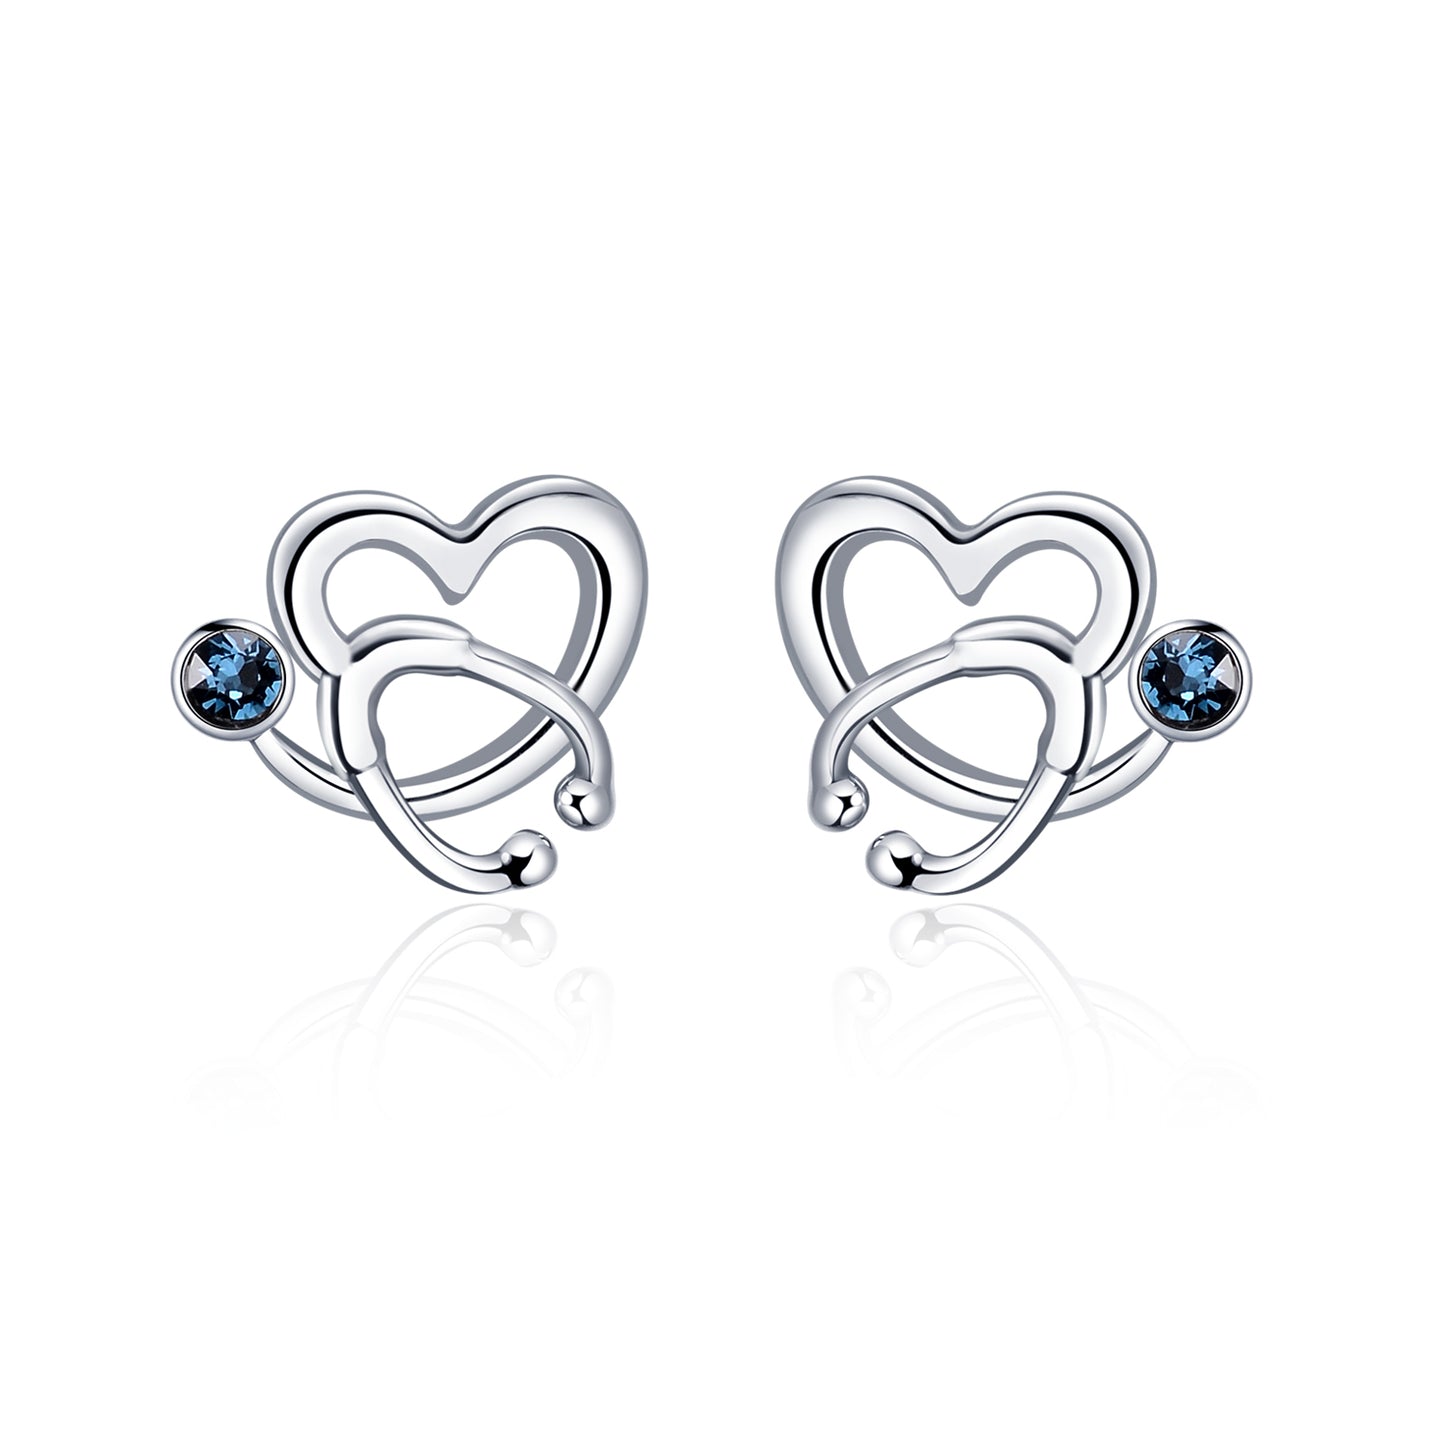 Nurse Earrings Sterling Silver Stethoscope Earrings Simulated Birthstone Studs Earrings with Crystal Jewelry Gifts For Nurse Doctor - Niki Ice Jewelry 